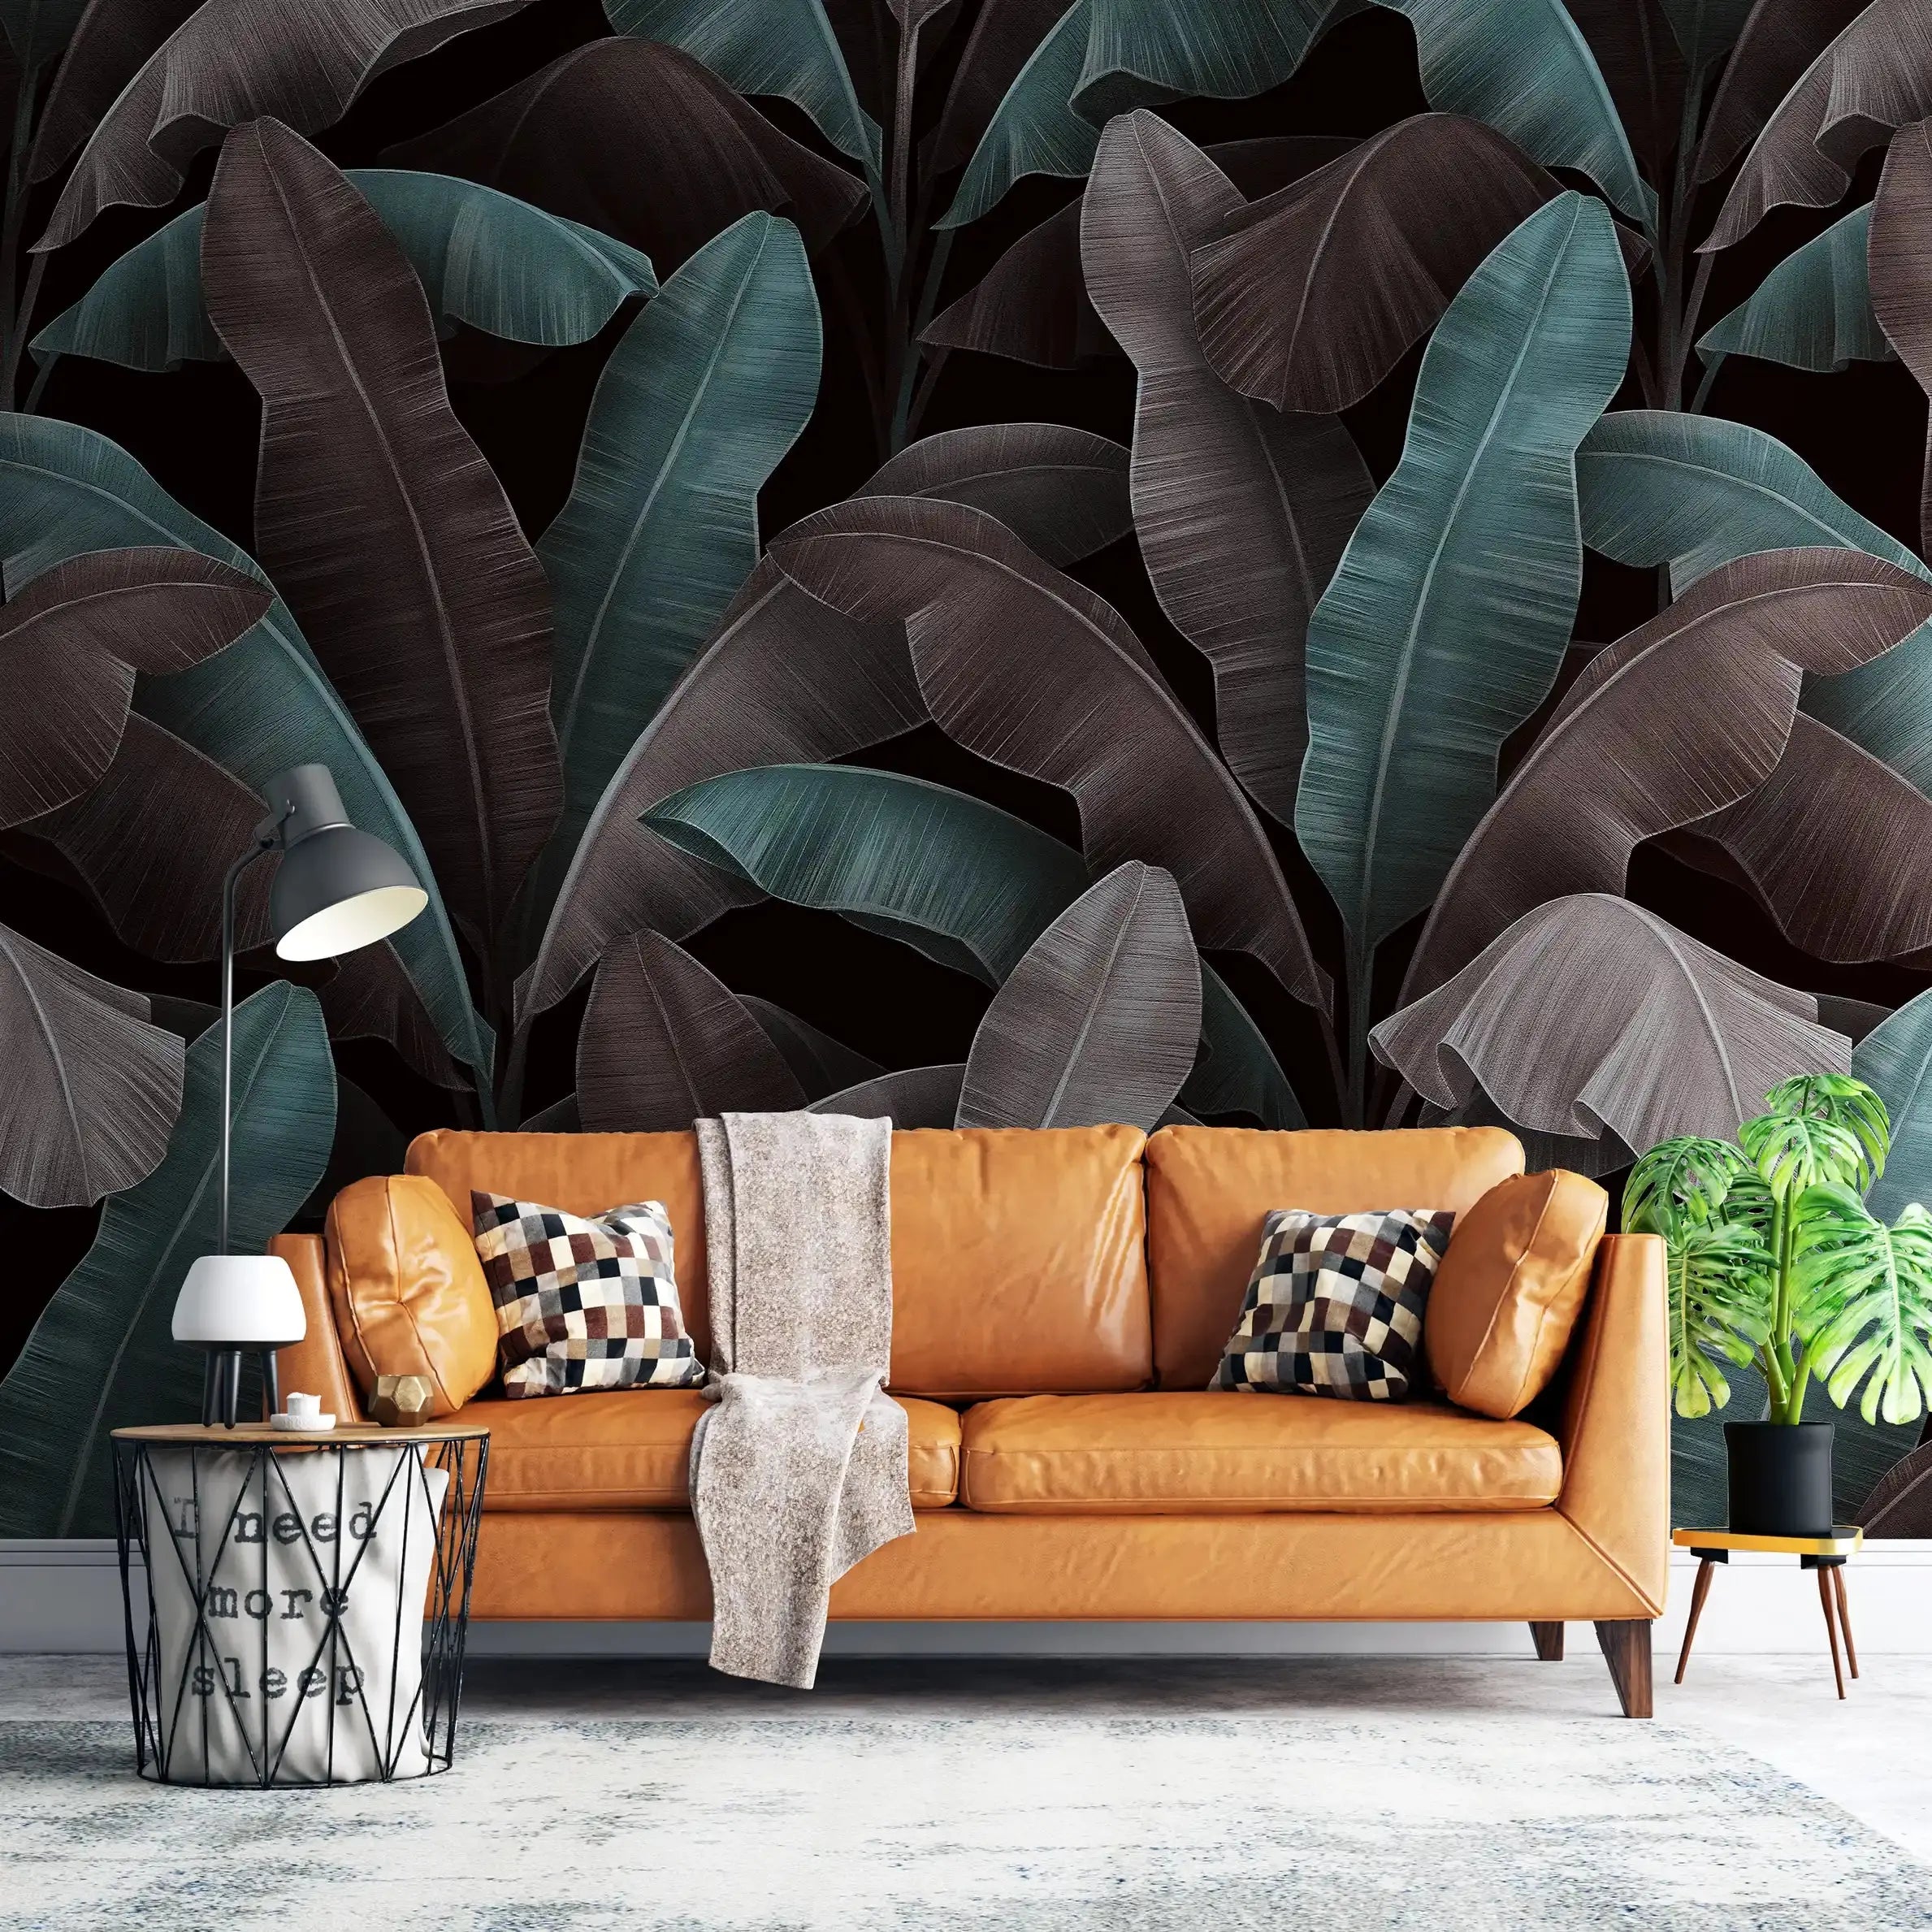 3062-C / Botanical Peelable Stickable Wallpaper with Gold Banana Leaves - Self-Adhesive, Removable Wallpaper for Walls, Boho Decor - Artevella